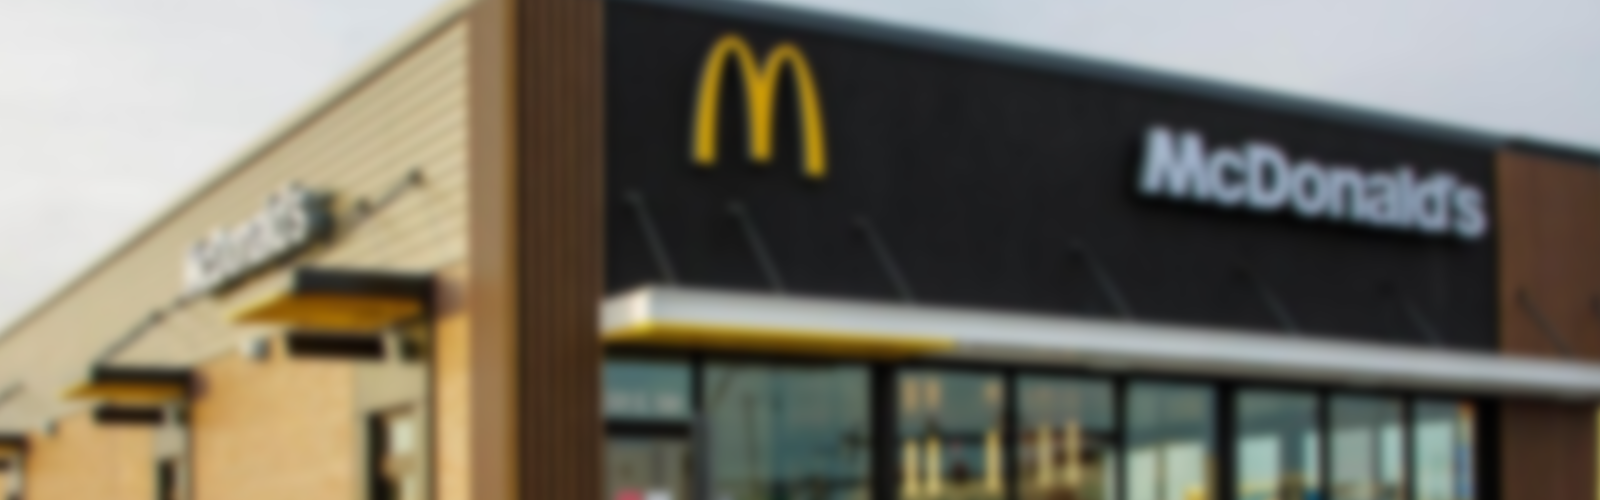 McDonald's franchise financing